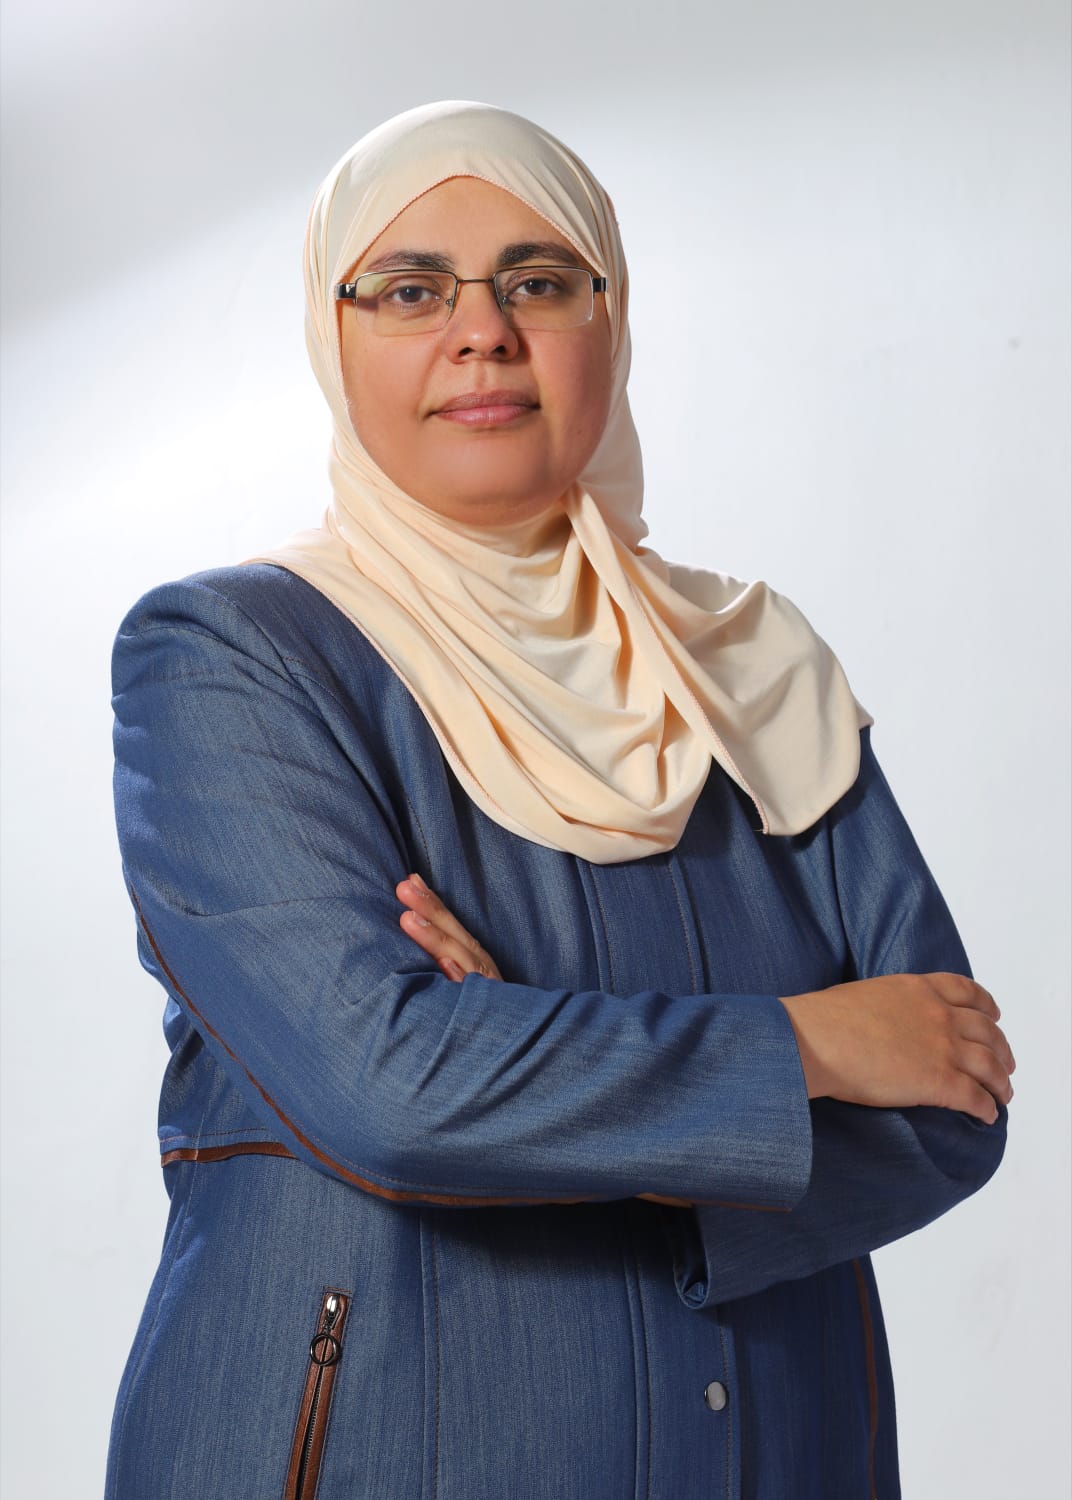 Academic promotion for Dr. Soha Al-Beitawi